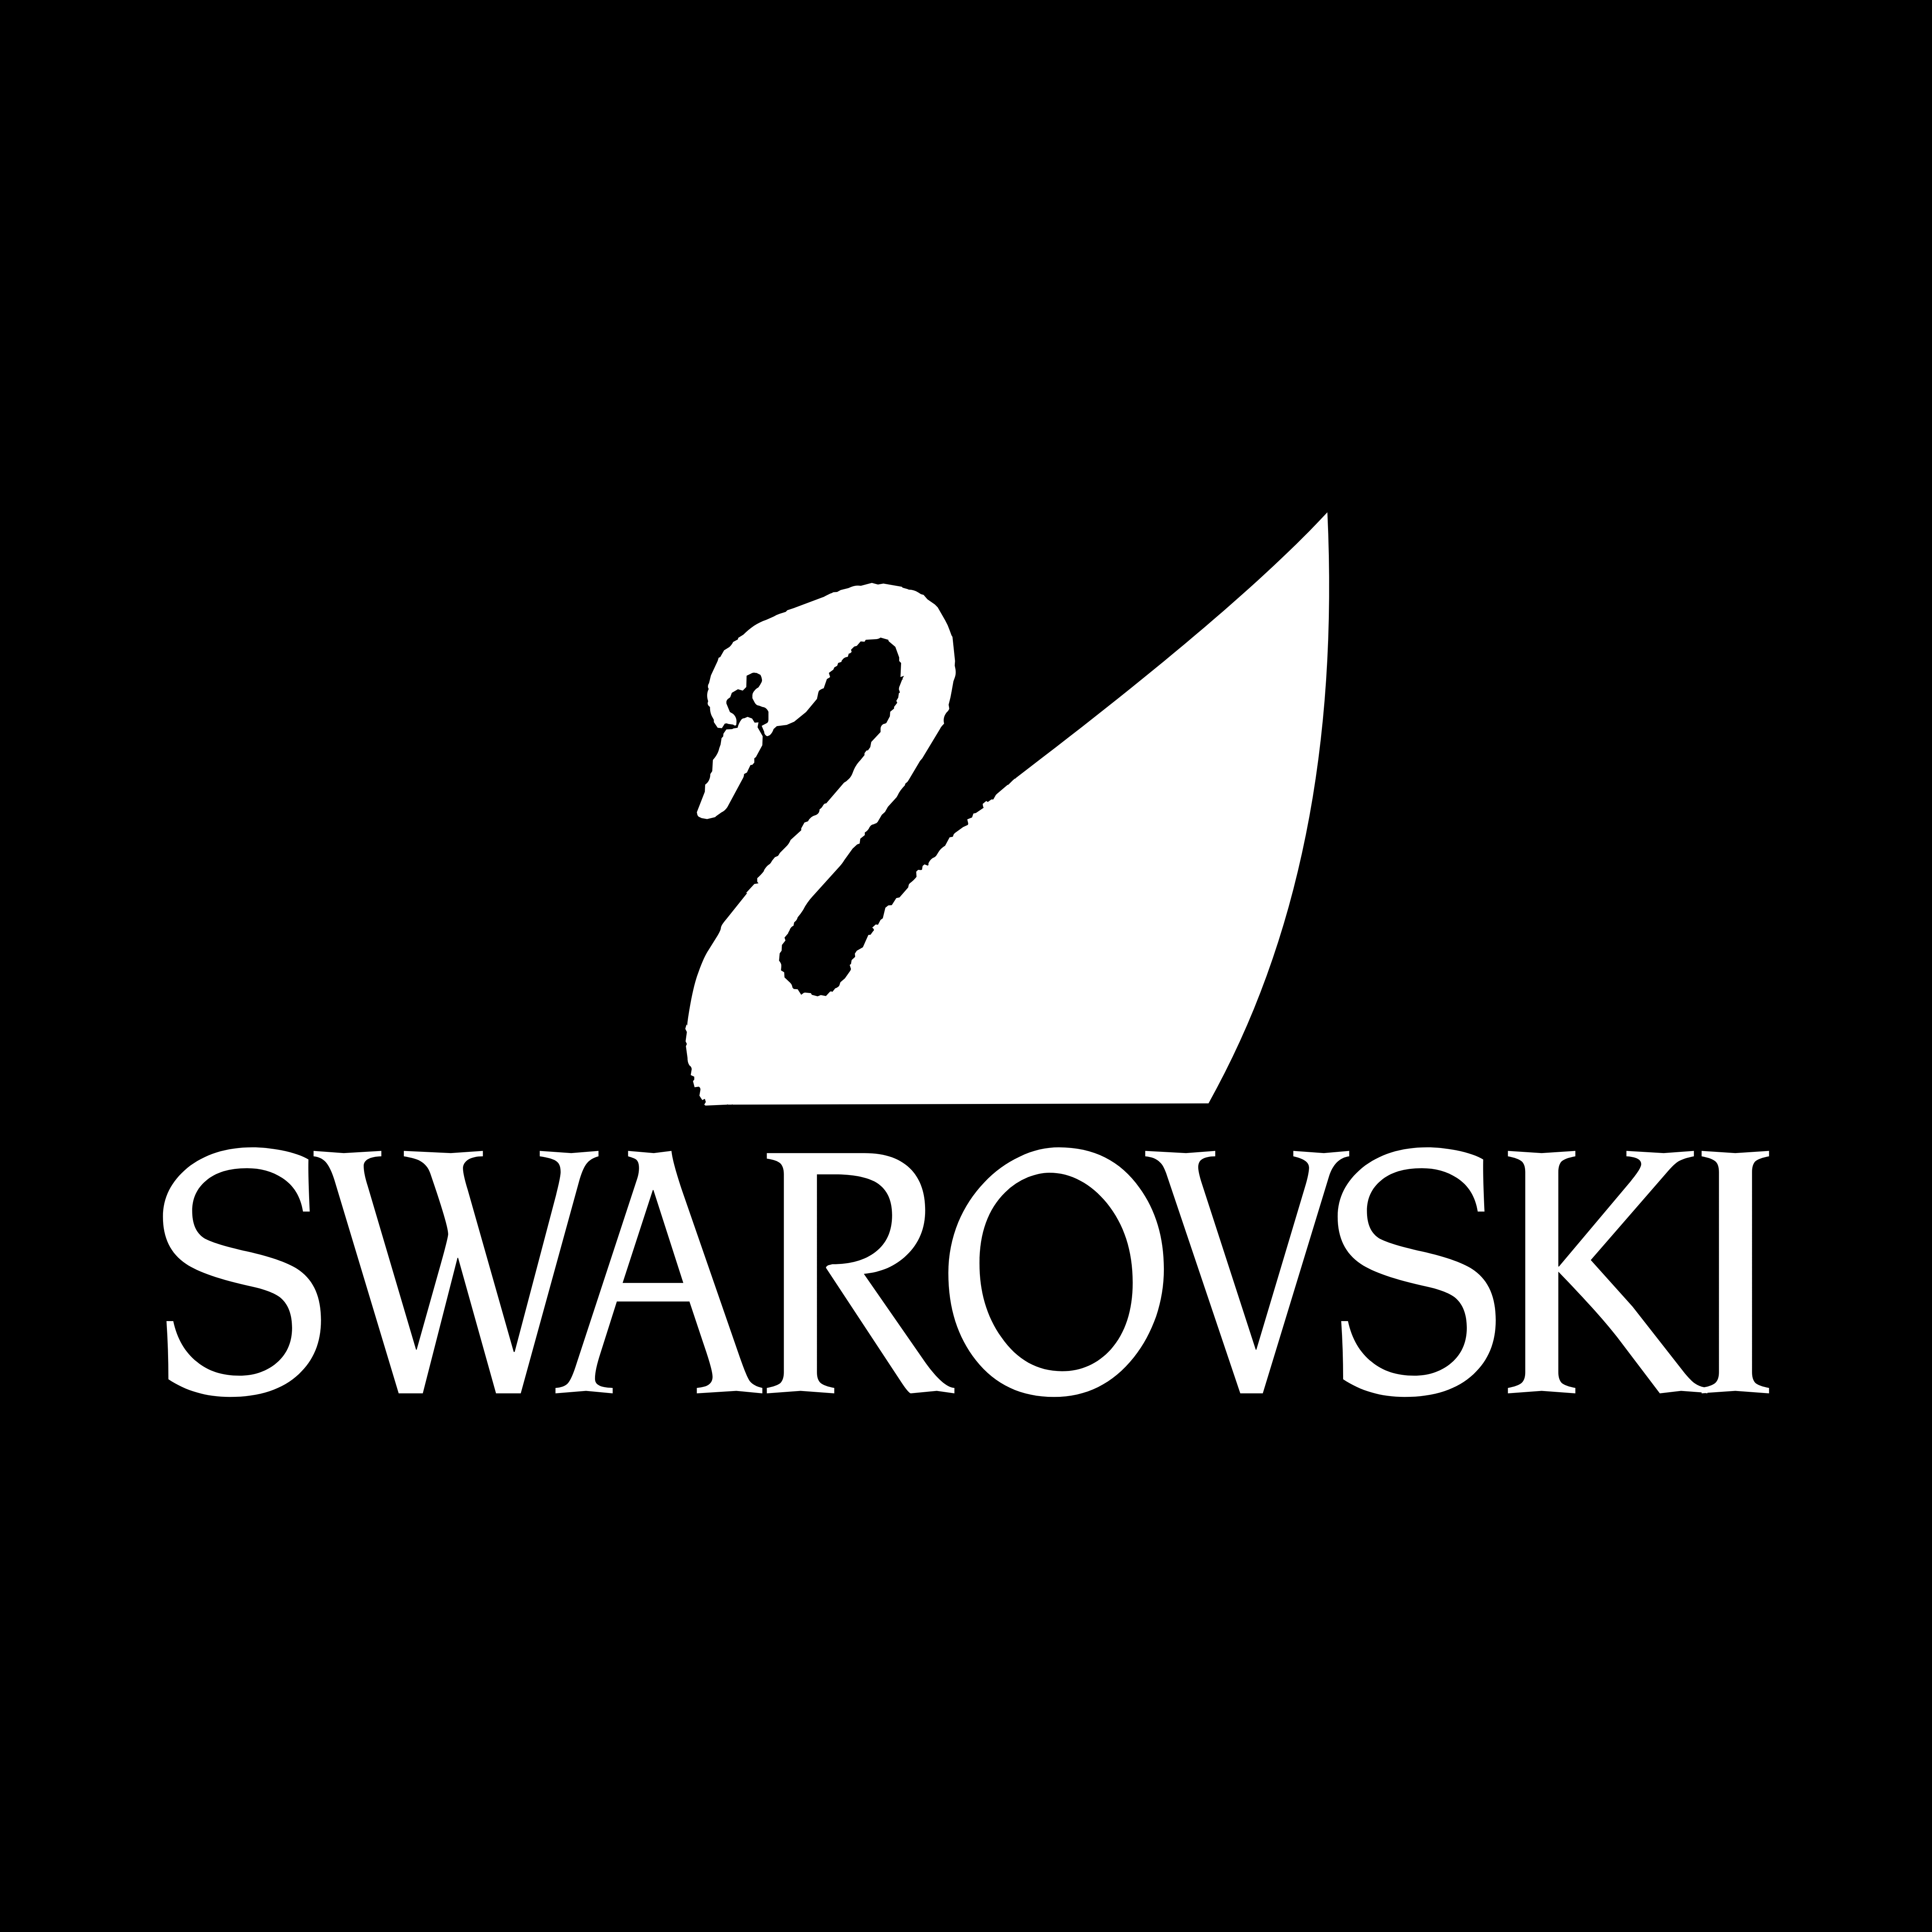 Swarovski Logo - Swarovski – Logos Download